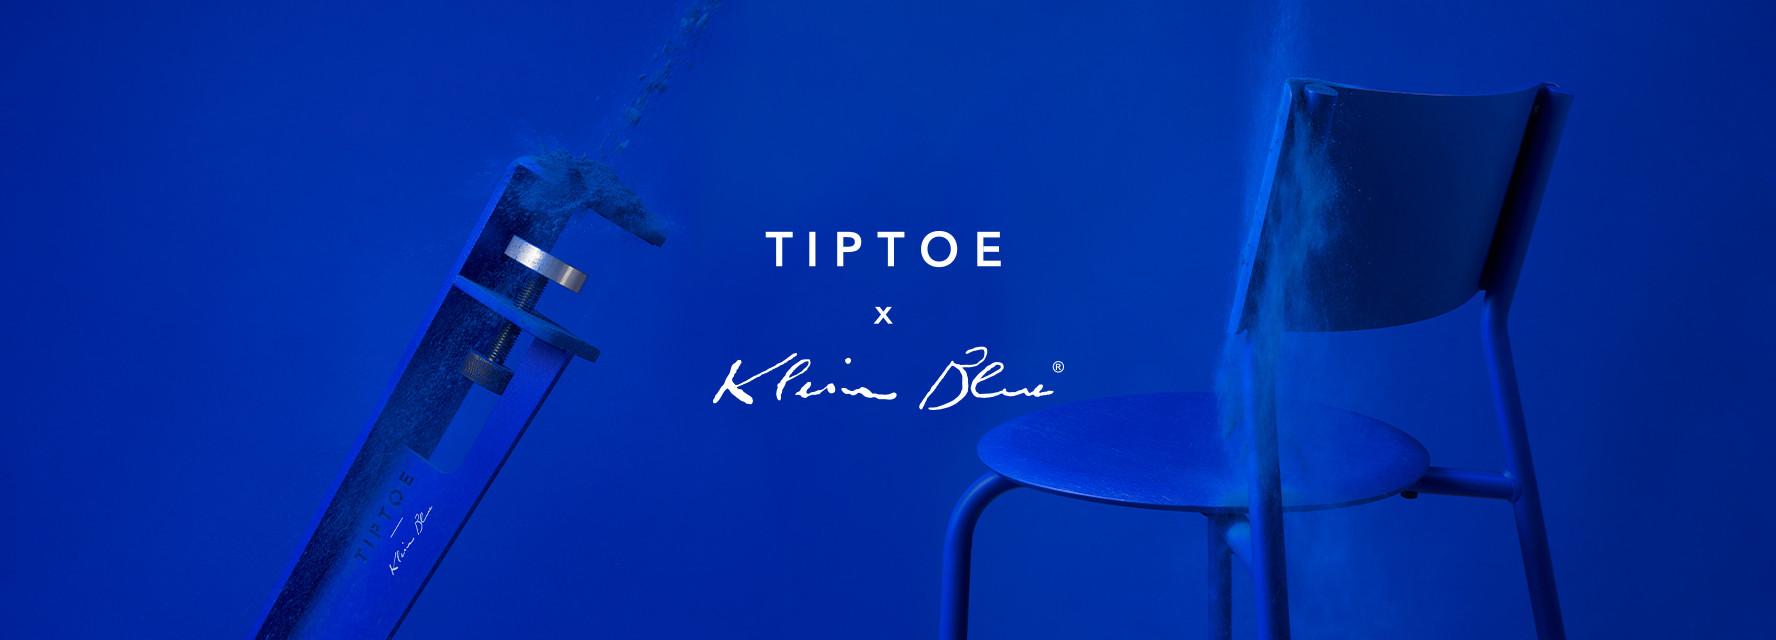 The TIPTOE x Klein Blue collaboration